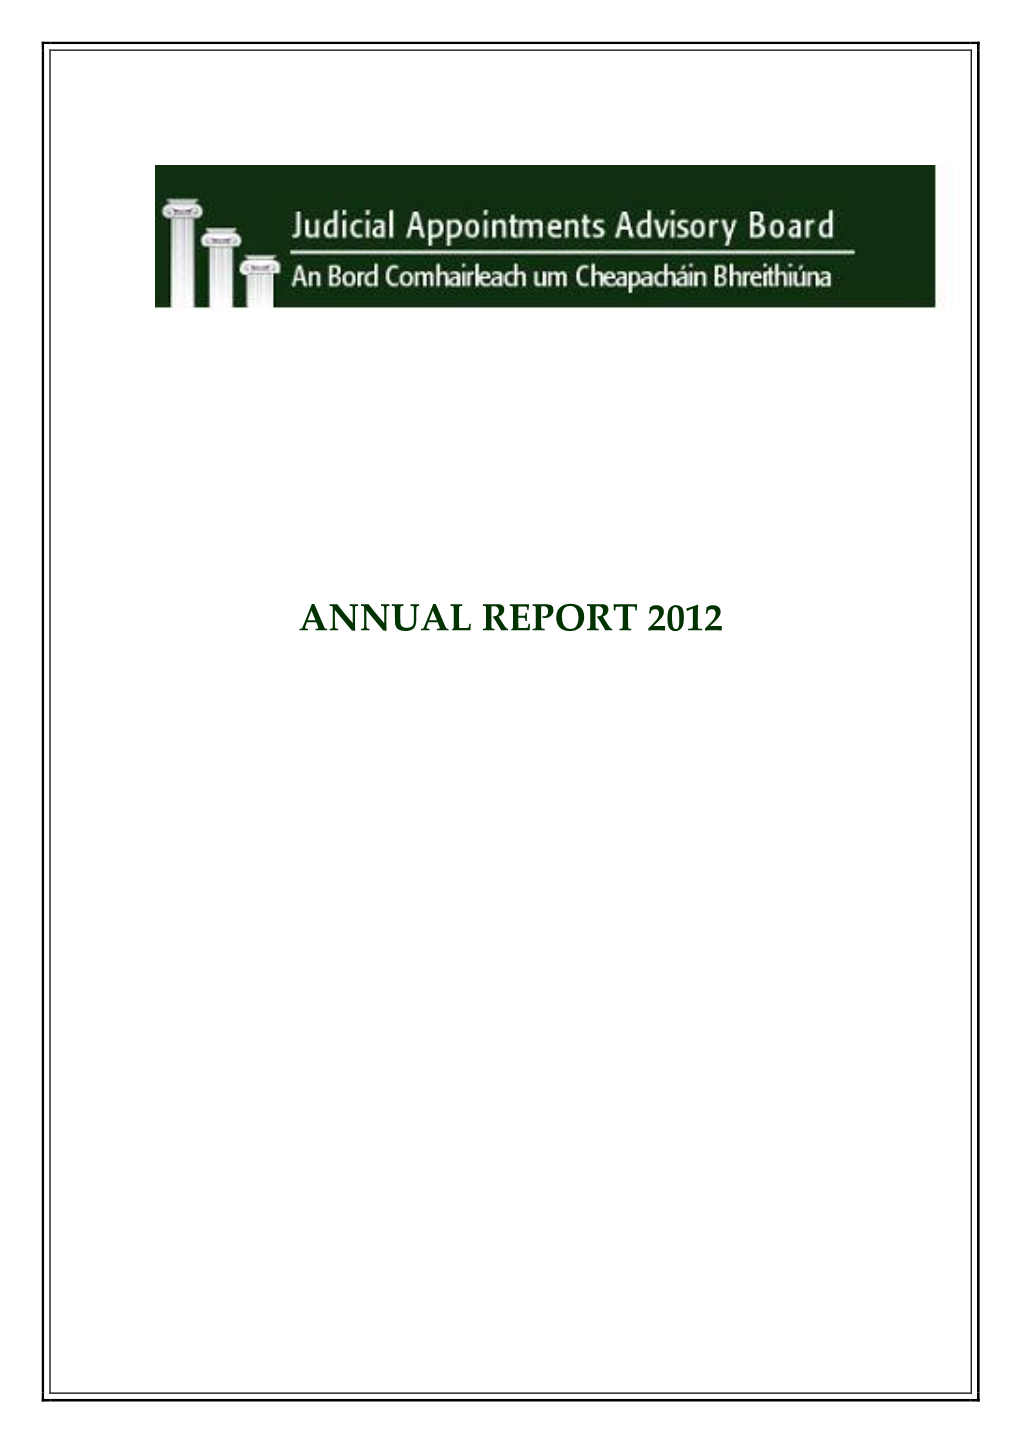 JAAB Annual Report 2012